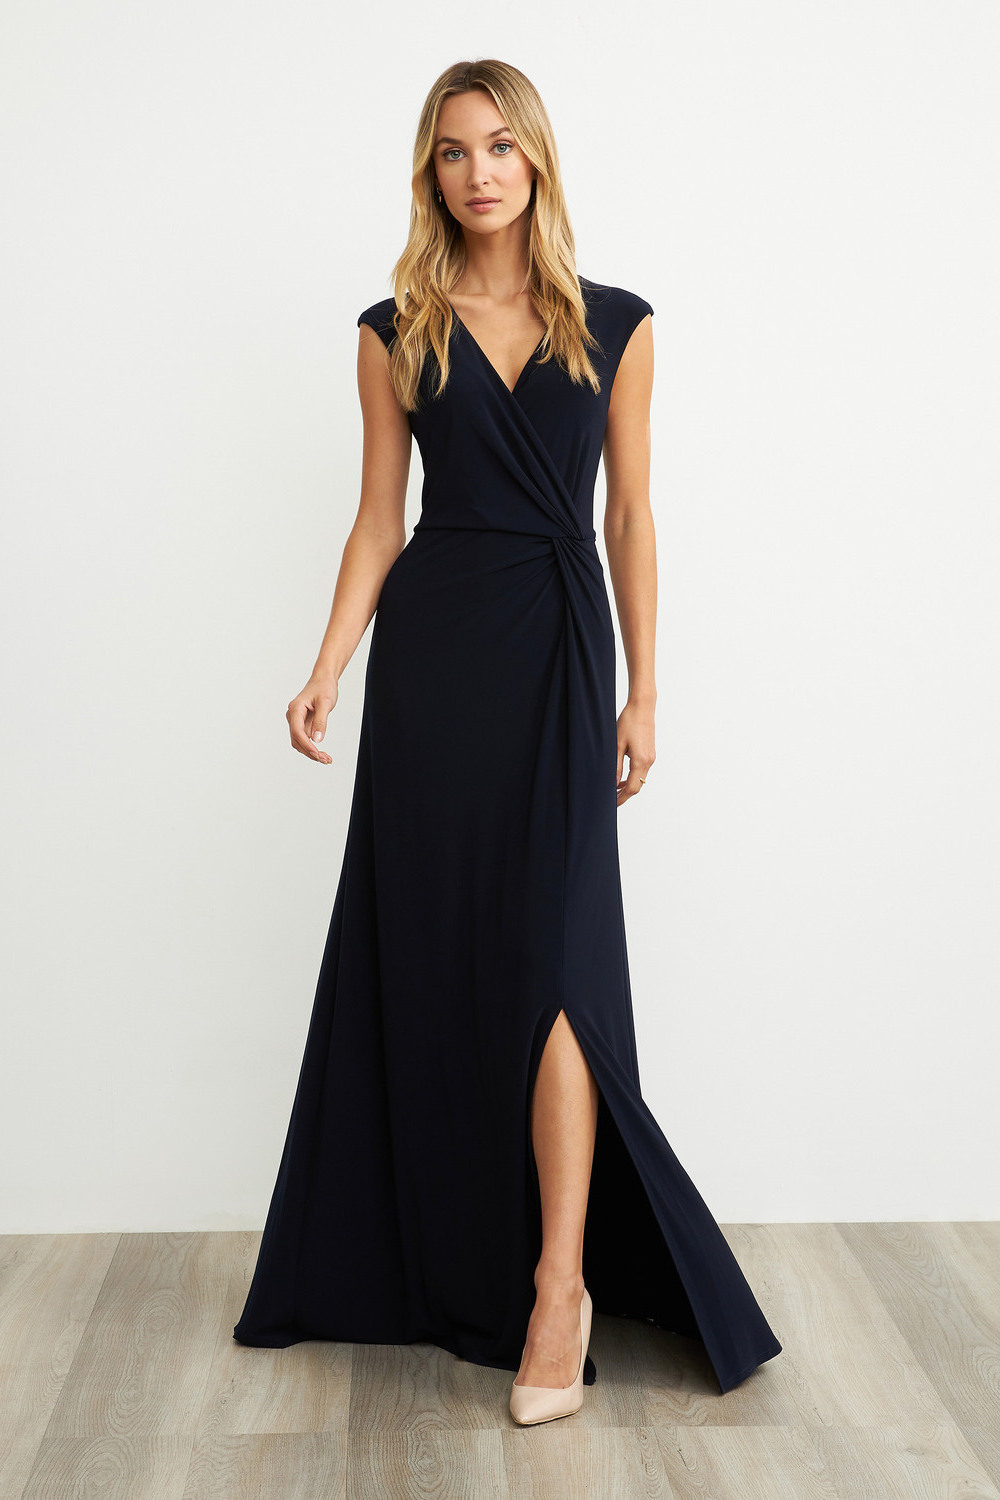 Joseph Ribkoff Wrap Maxi Dress Style 203195. Midnight Blue